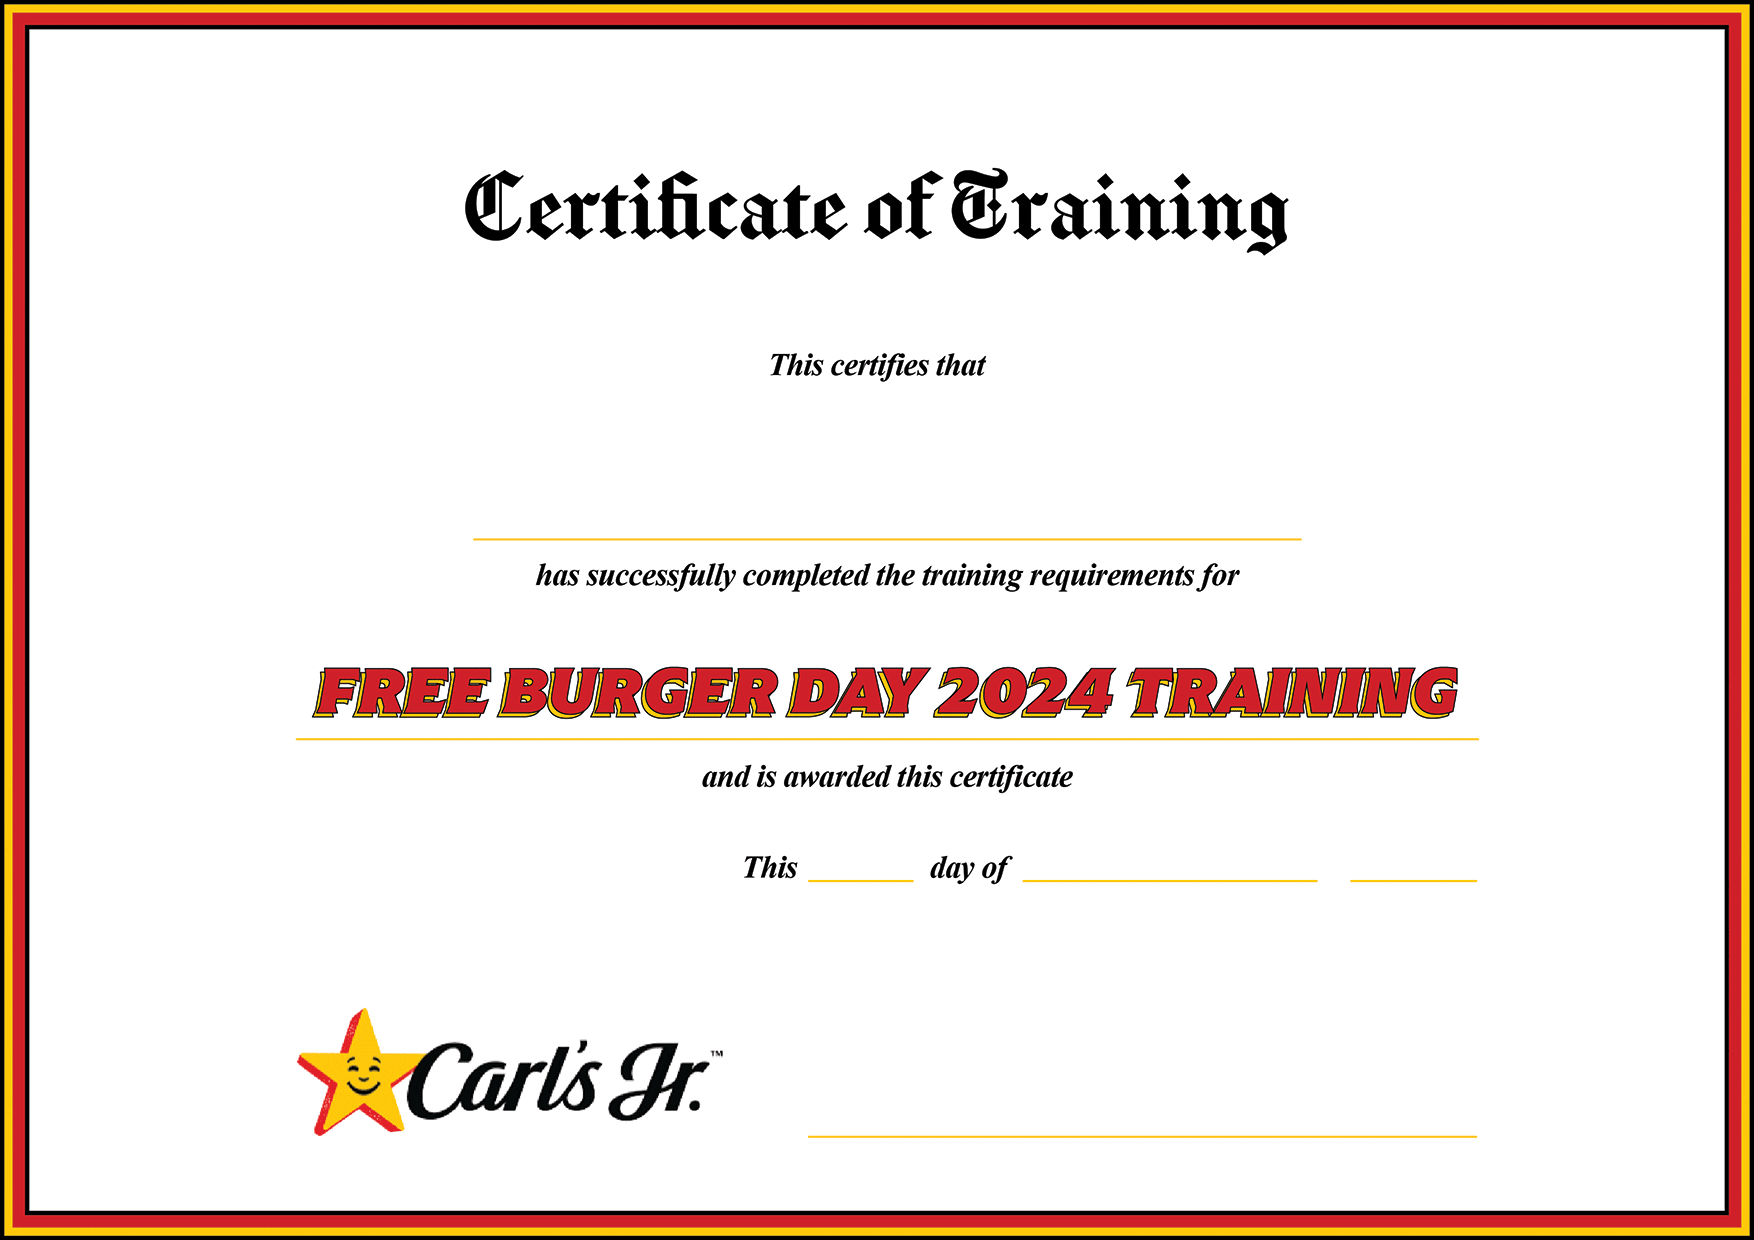 Carl's Jr Free Burger Day Employee Training Certificate